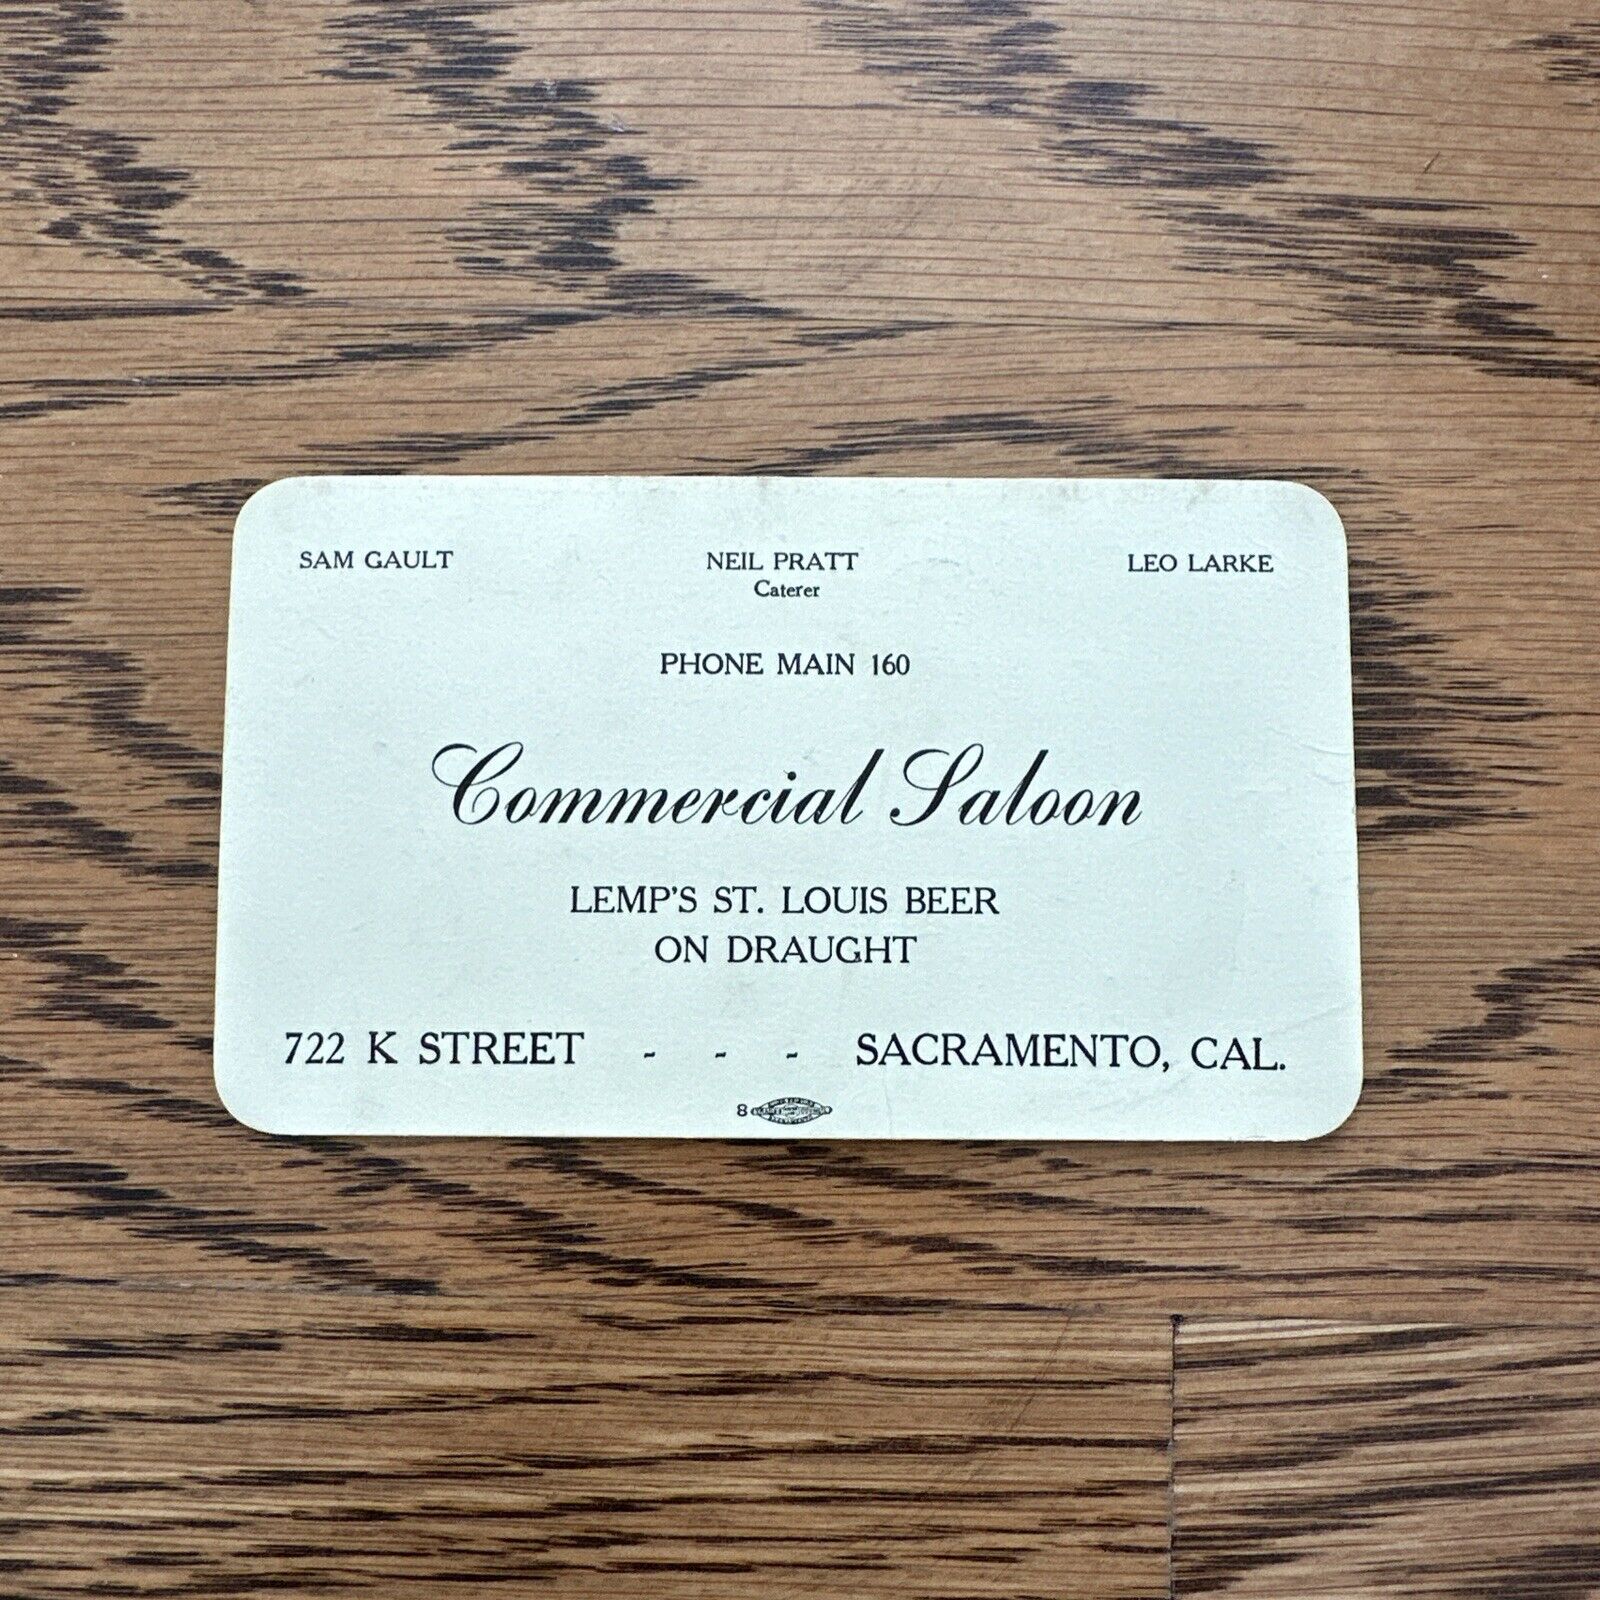 Vintage Business Card 1910s: Commercial Saloon, Lemp’s Beer, Sacramento CA